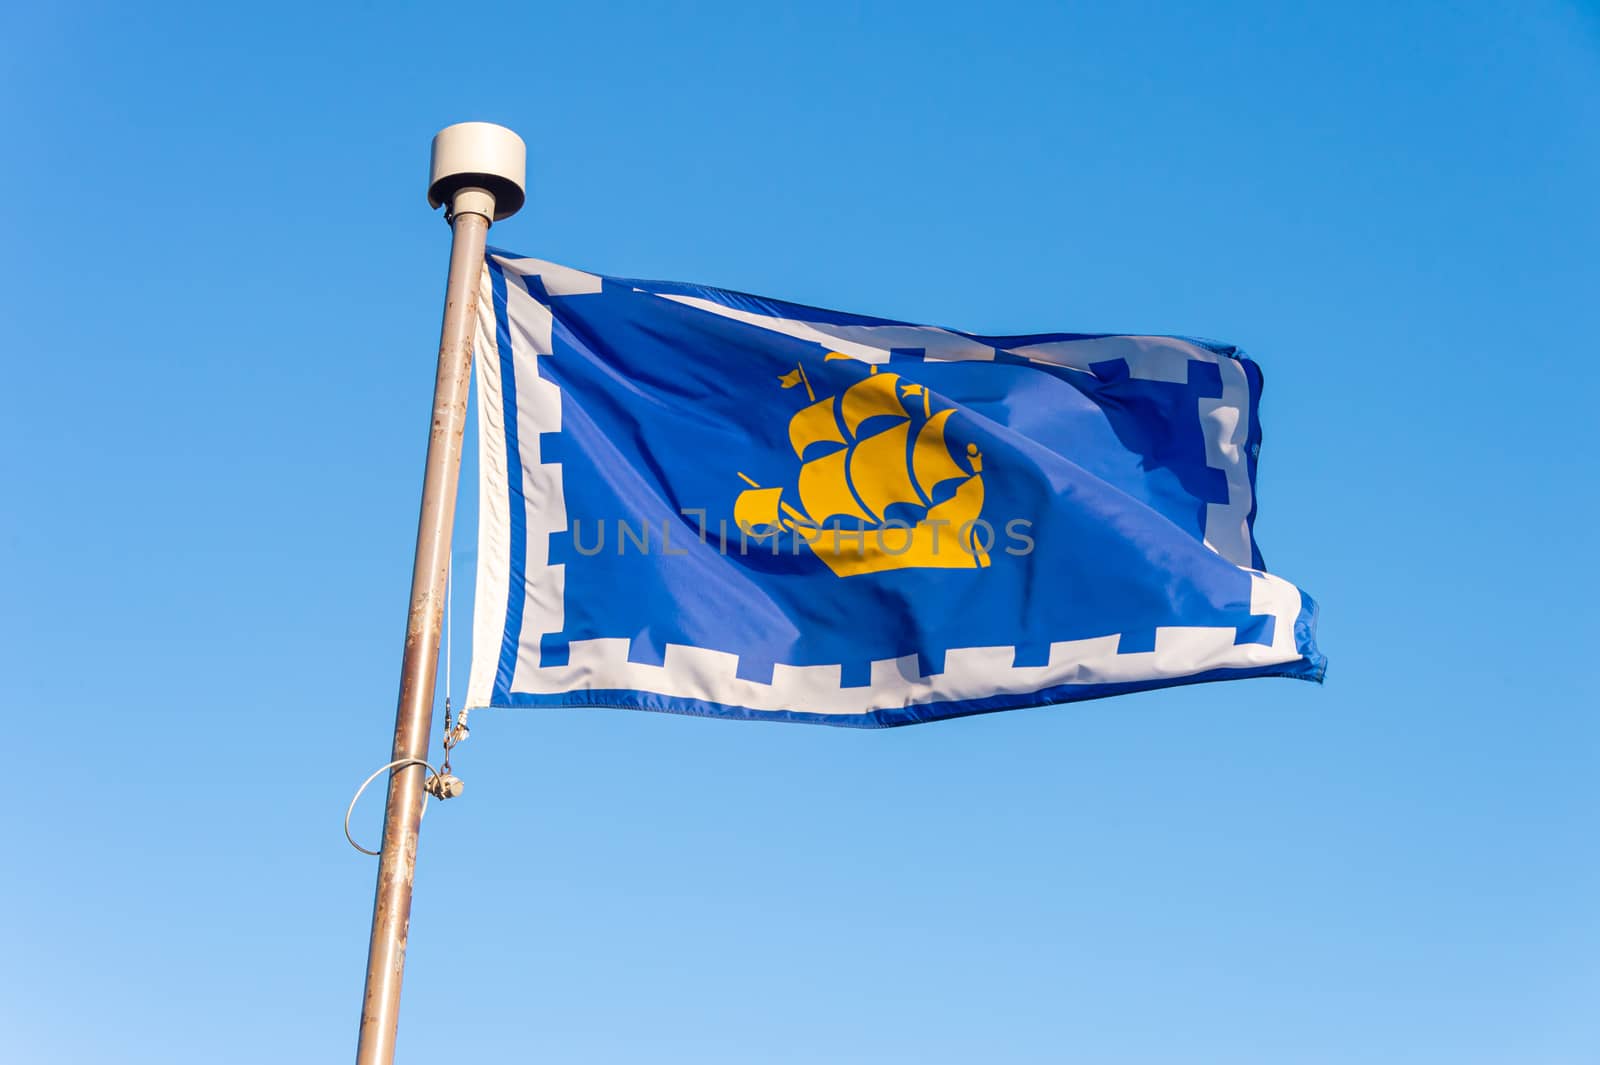 Quebec city flag over blue sky in Quebec City